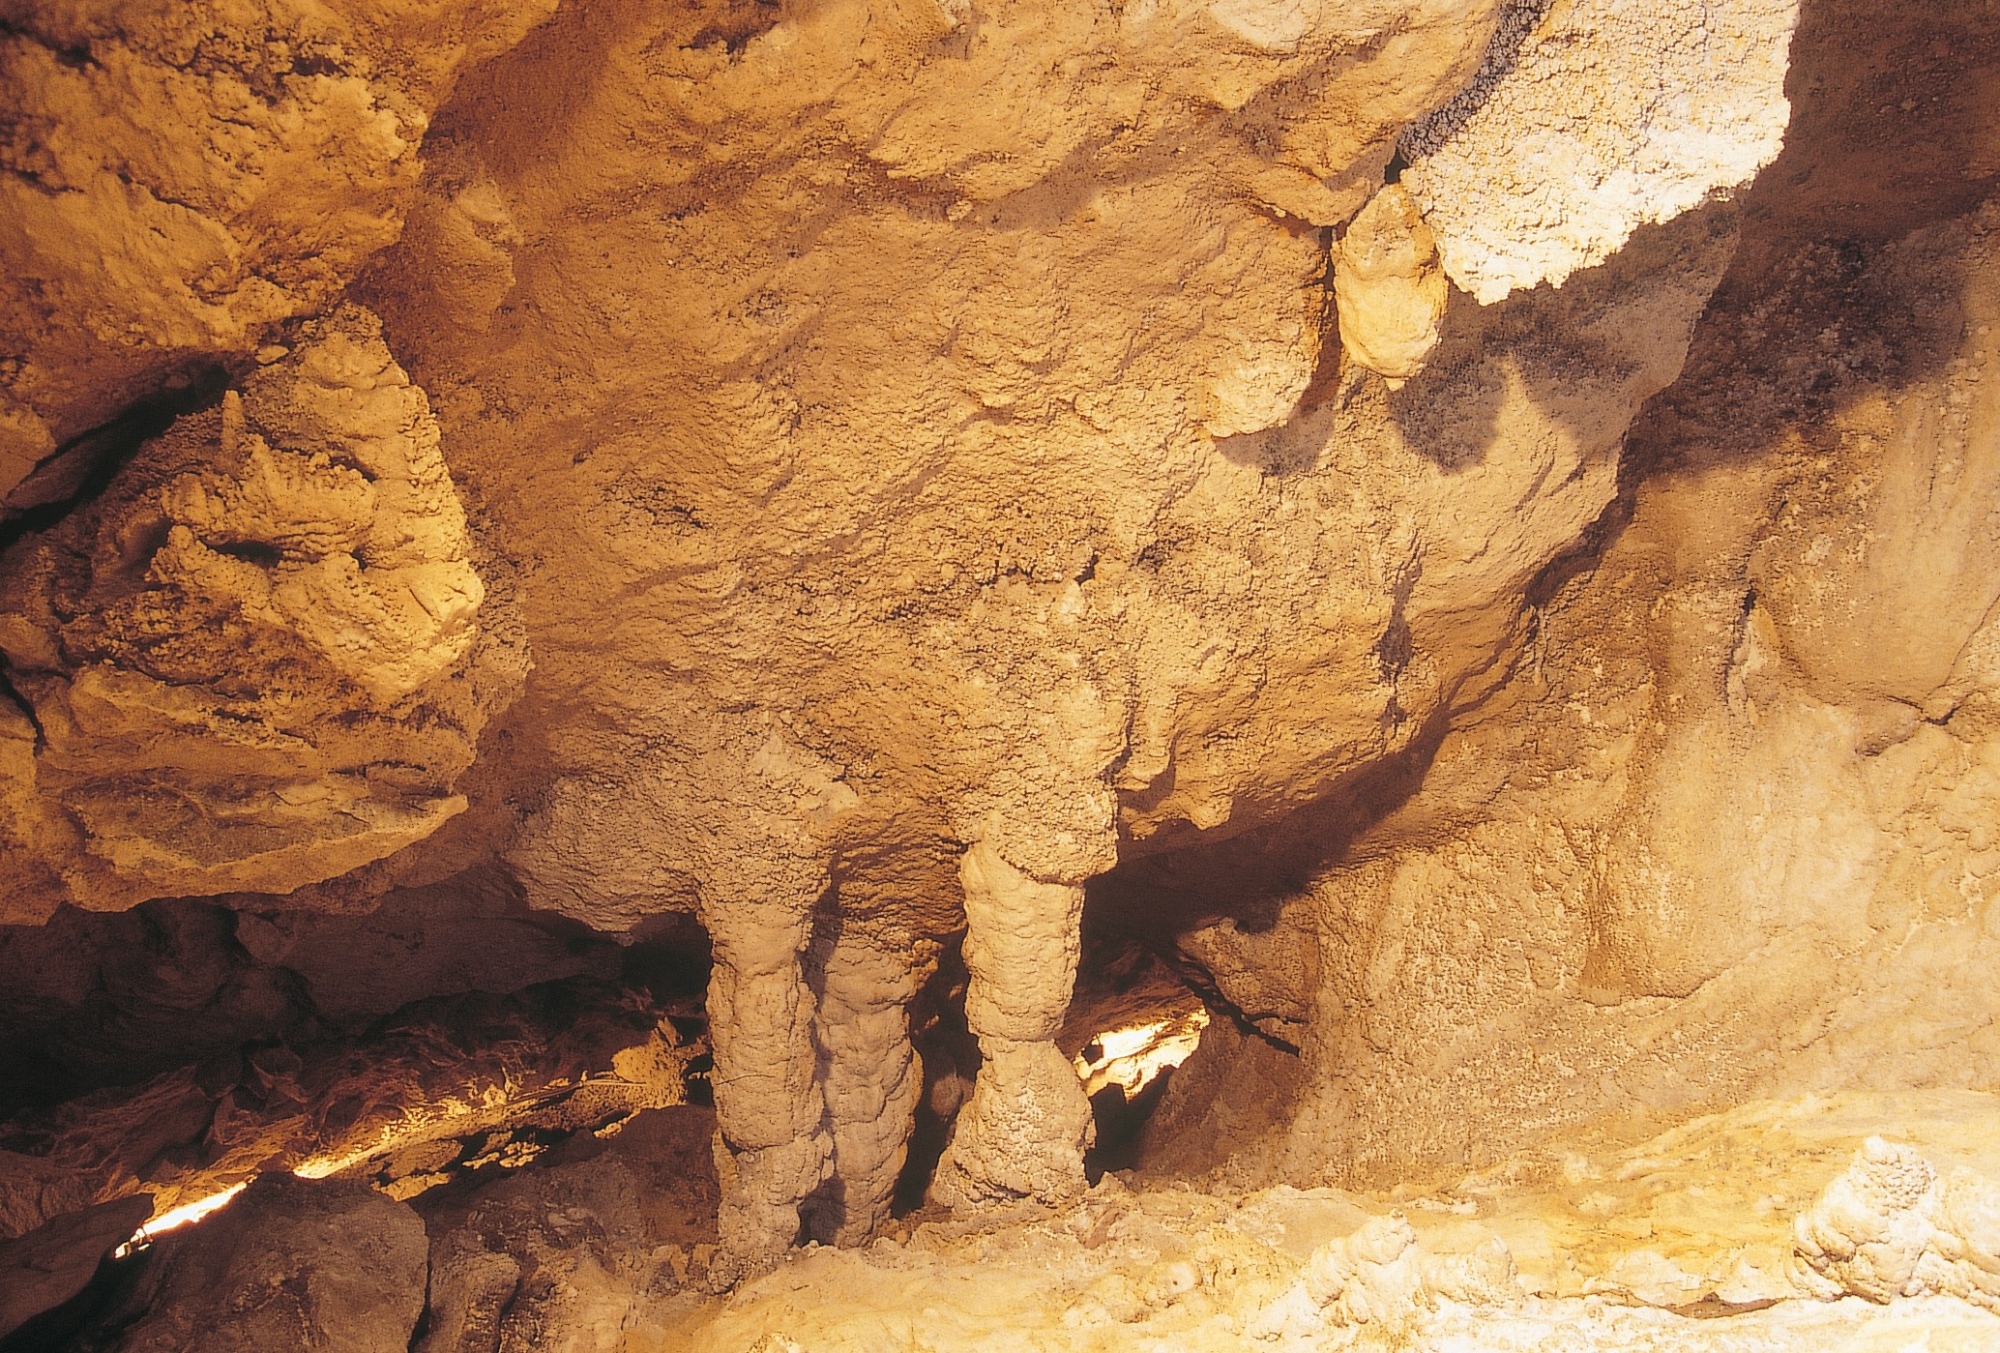 Grotte di Equi Terme, Apuane